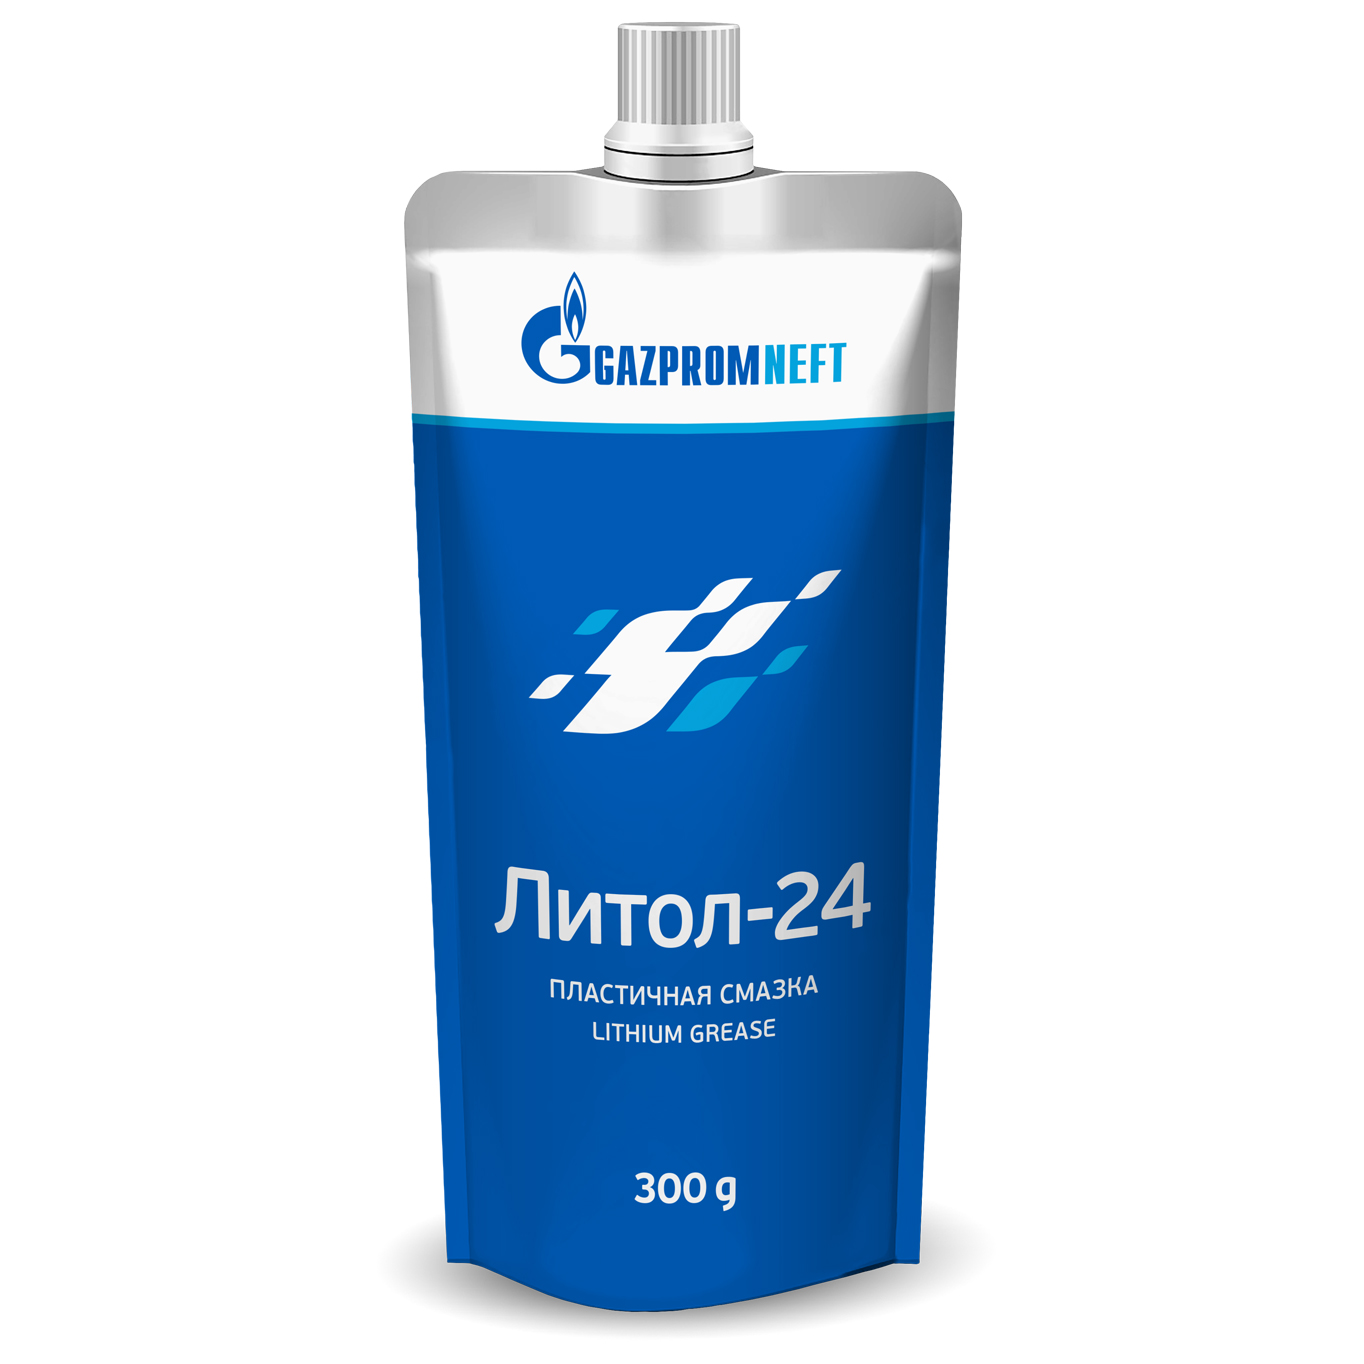 Пластичная смазка Gazpromneft Литол-24. Фото №3